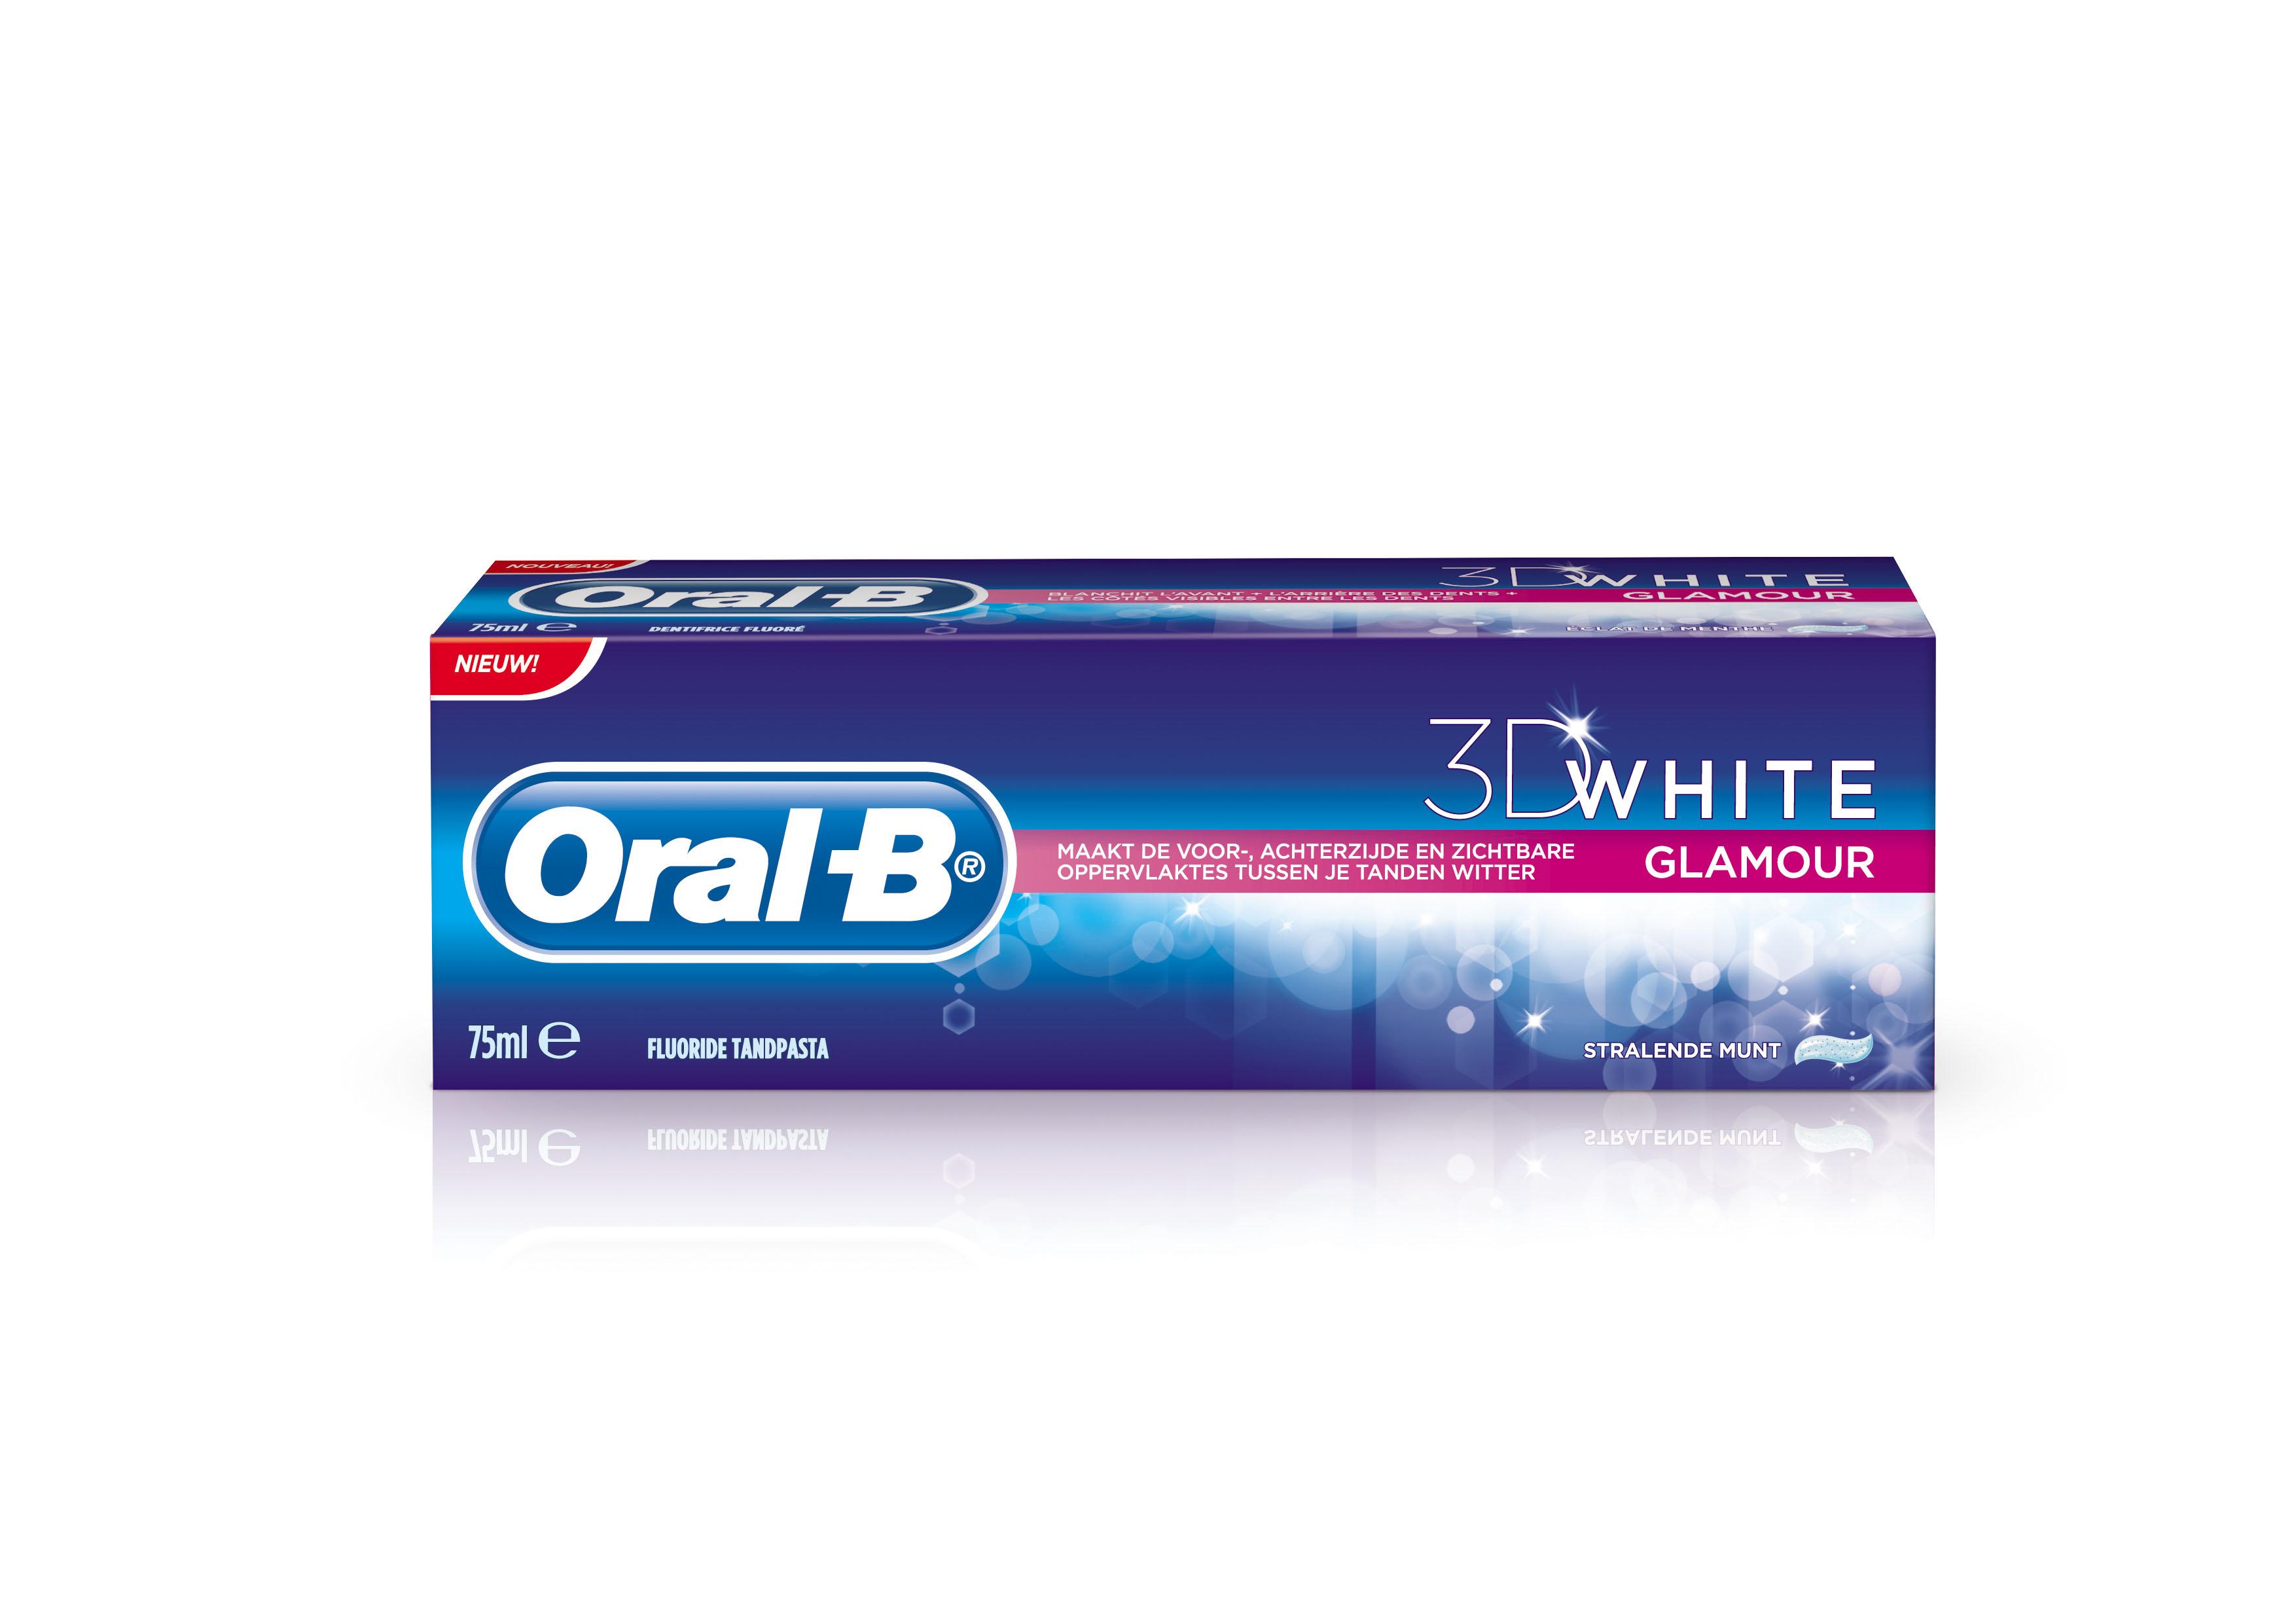 Oral-B tandpasta - €3.69